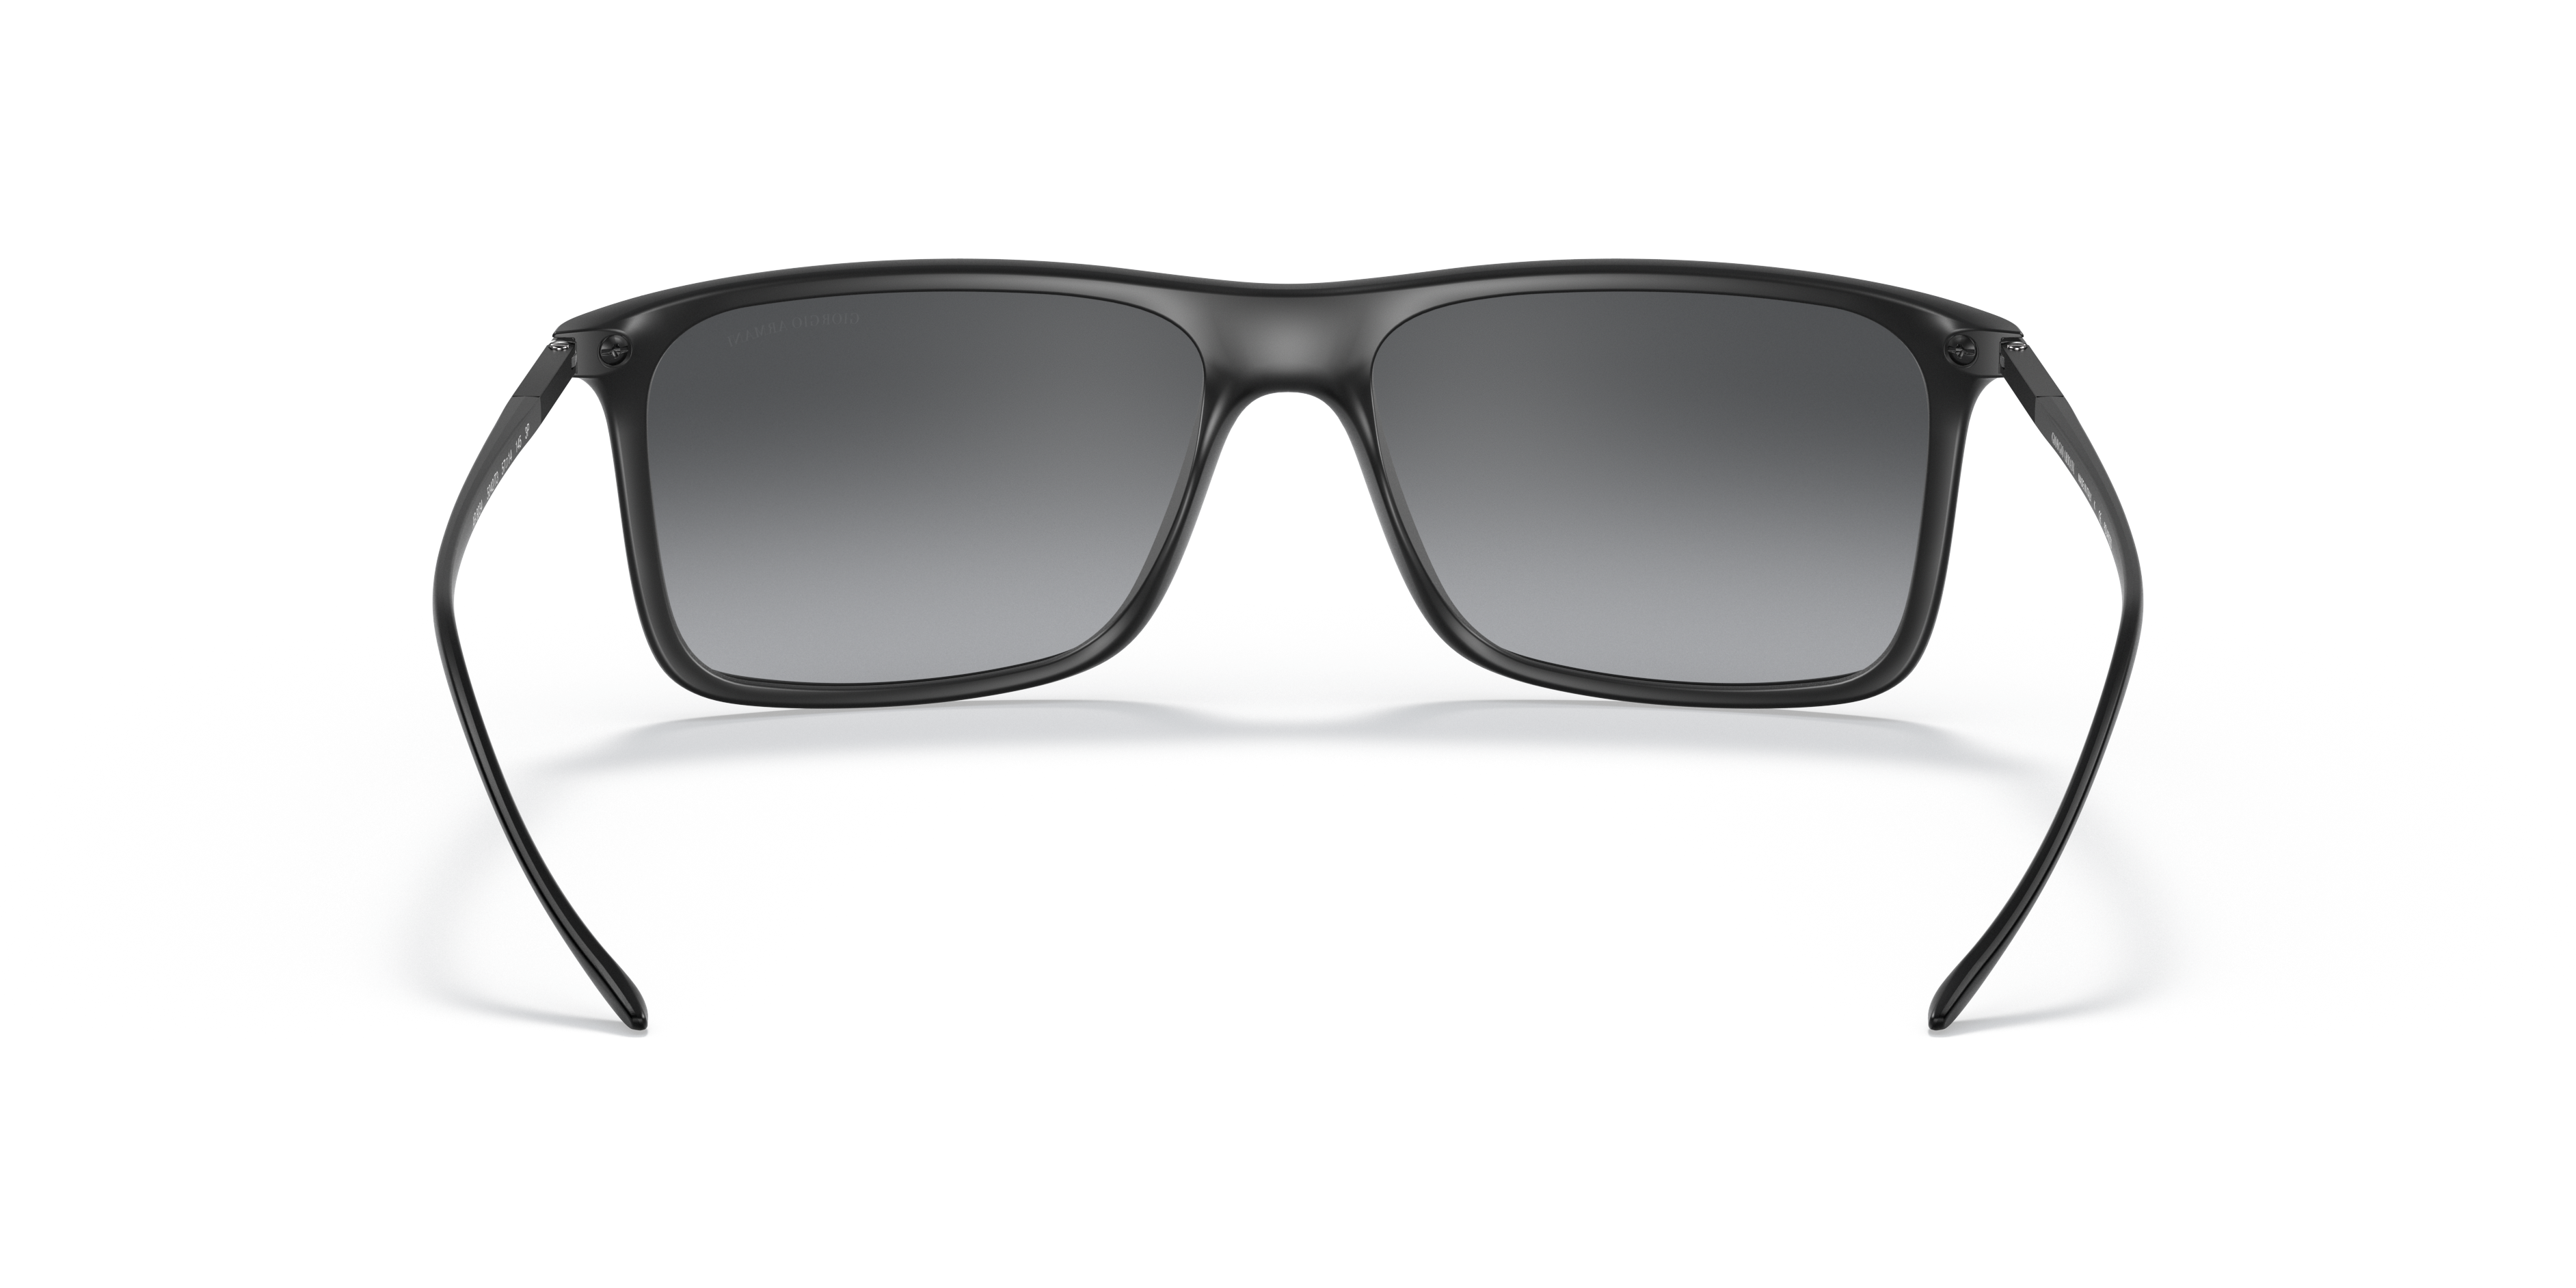 Save 20% Giorgio Armani Eyeglasses in Black for Men Mens Sunglasses Giorgio Armani Sunglasses 